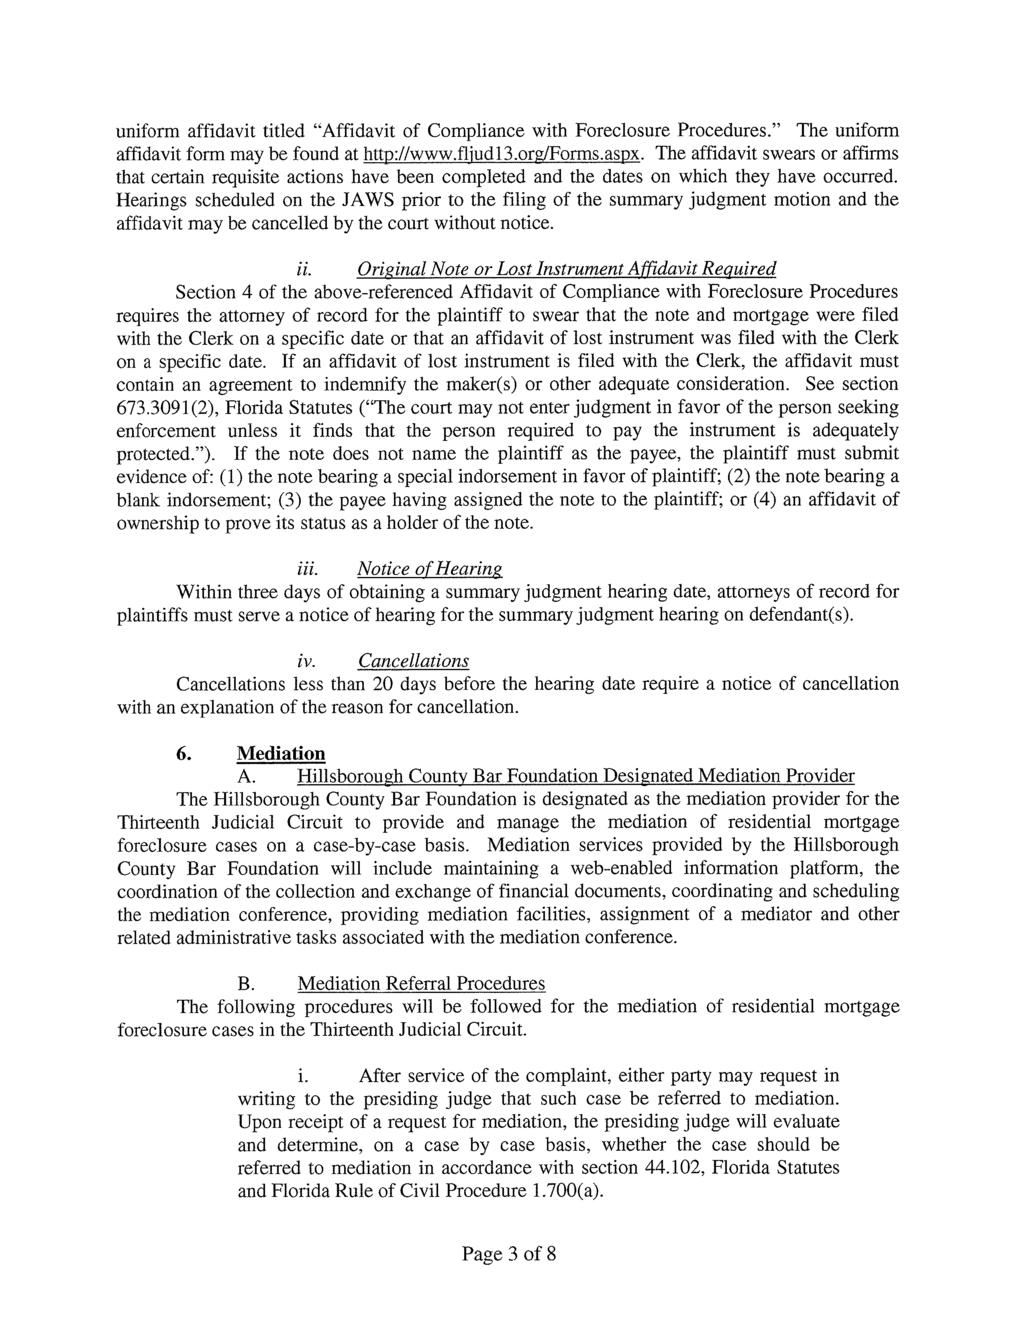 uniform affidavit titled "Affidavit of Compliance with Foreclosure Procedures." The uniform affidavit form may be found at http://www.fljud13.org/forms.aspx.